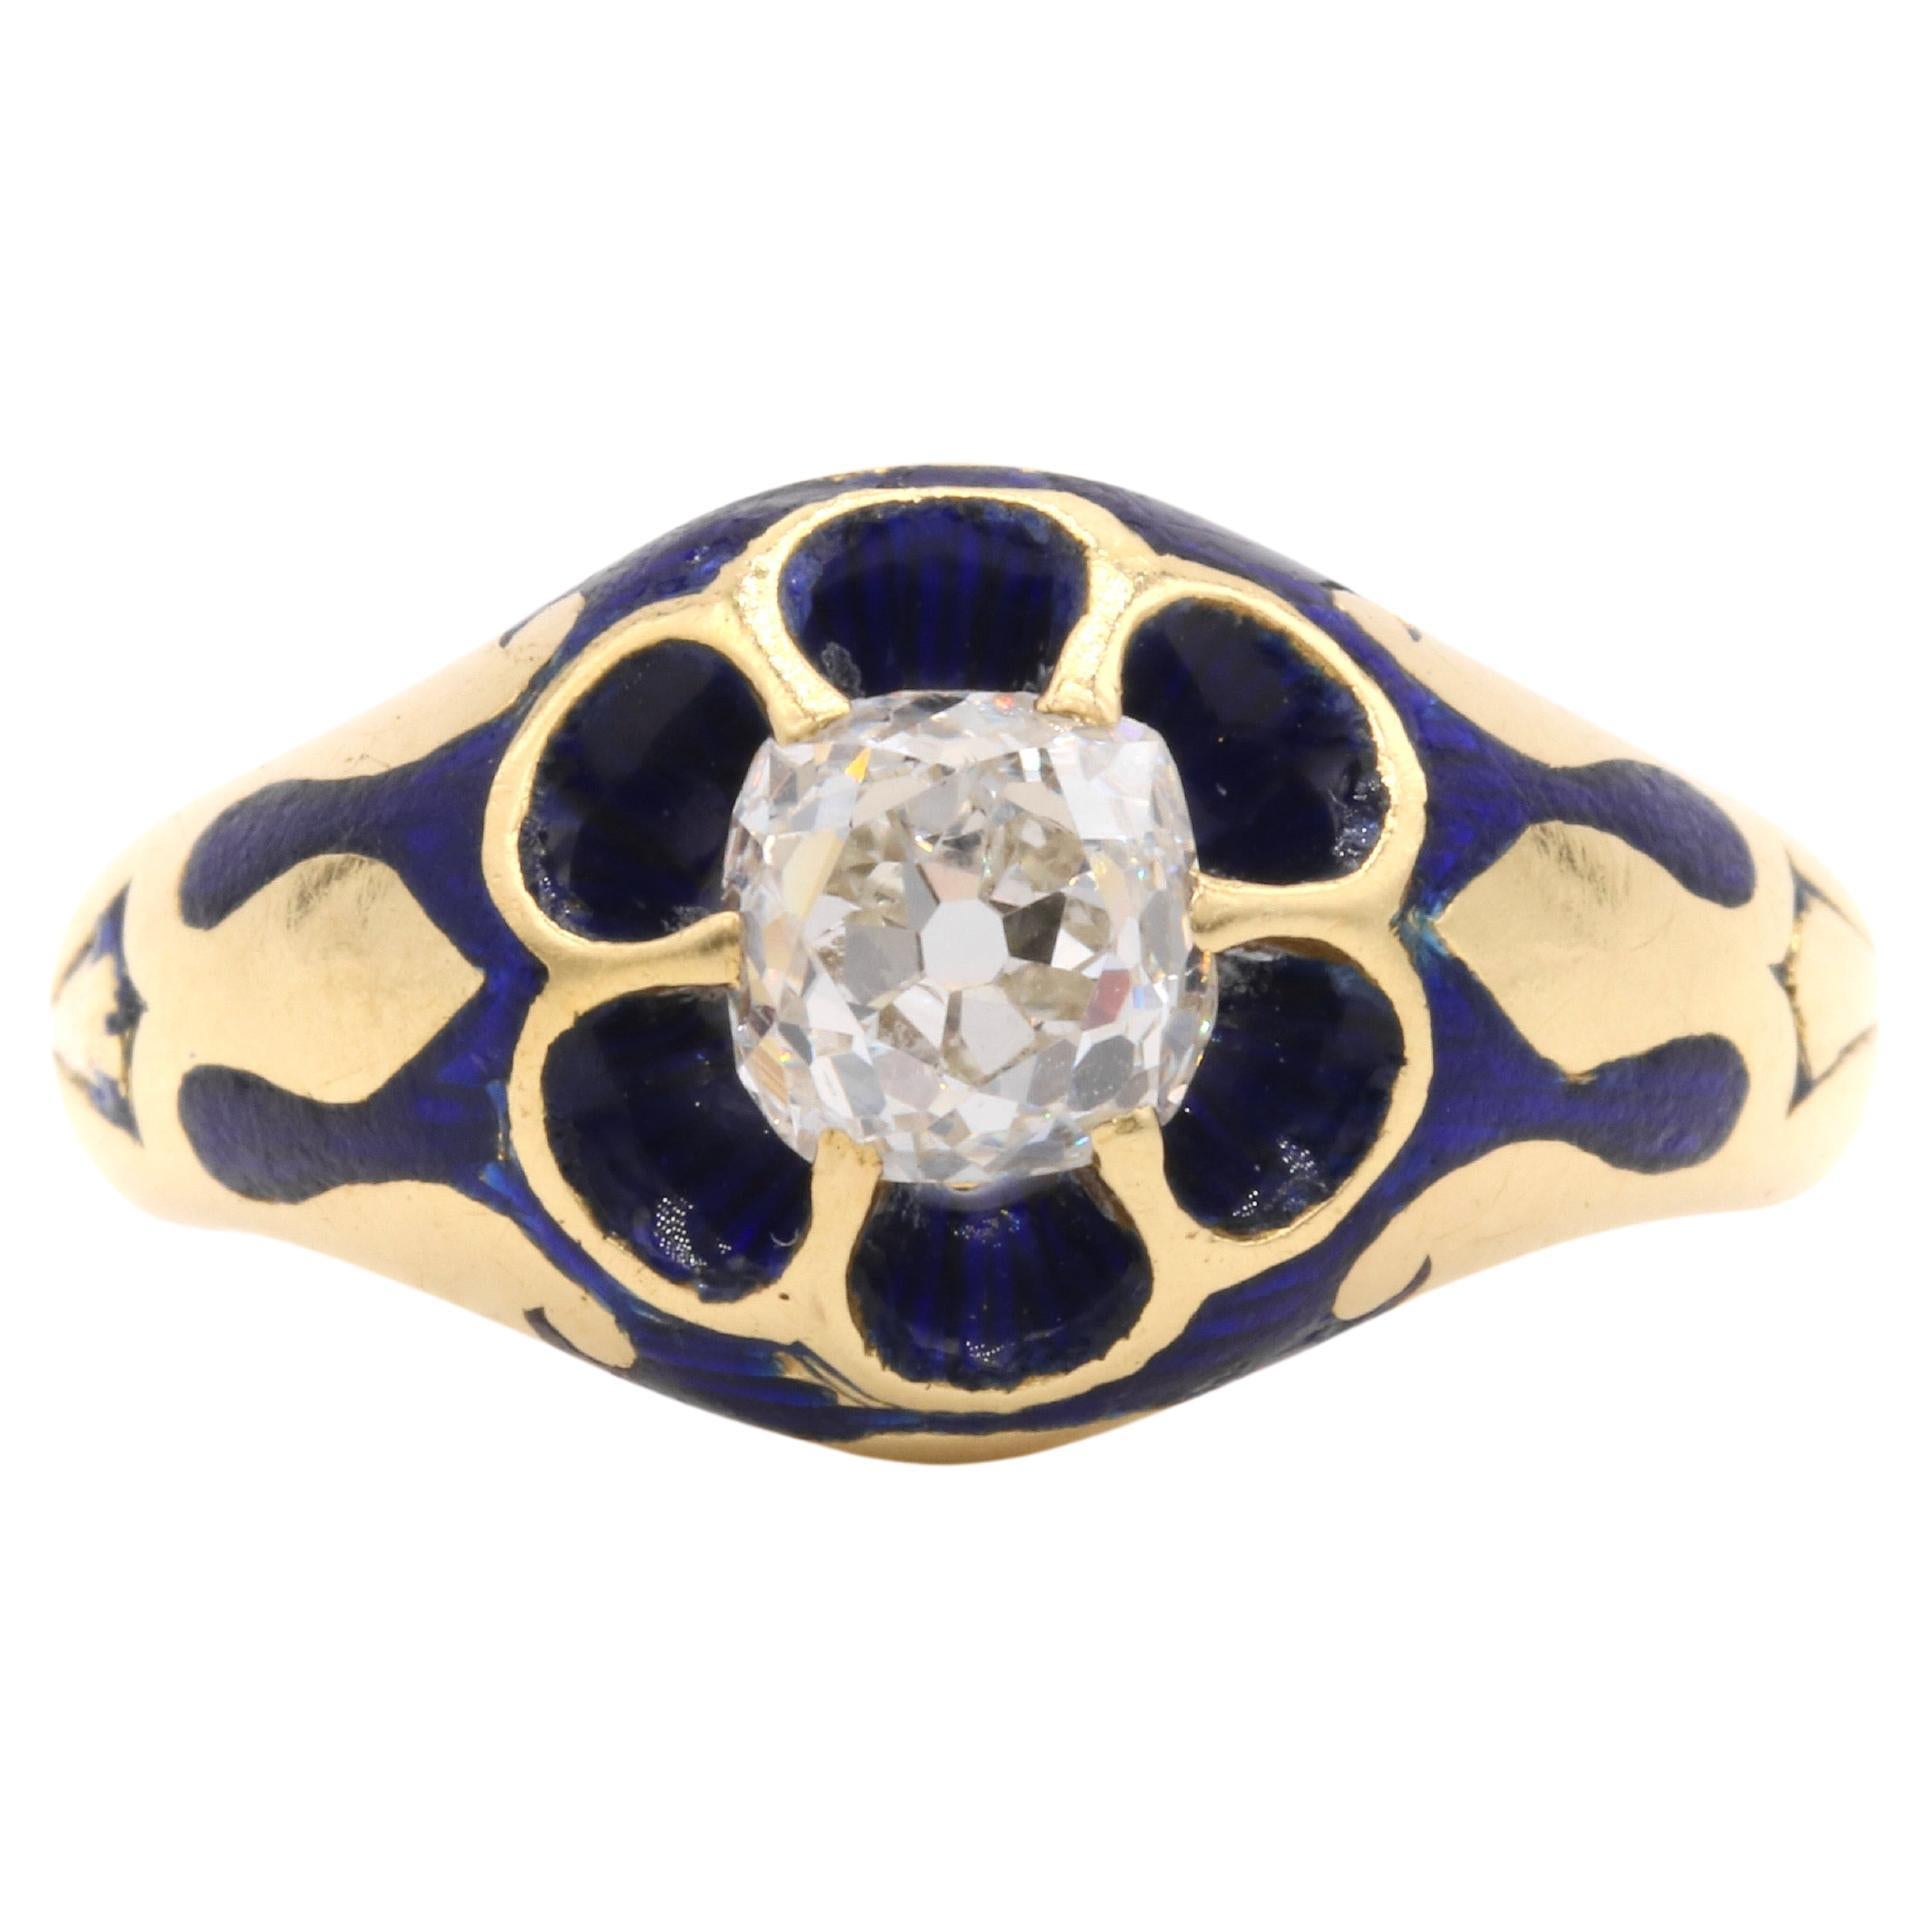 Antique Victorian 1880s 18K Gold Blue Enamel & 0.65ct Old Mine Cut Diamond Ring